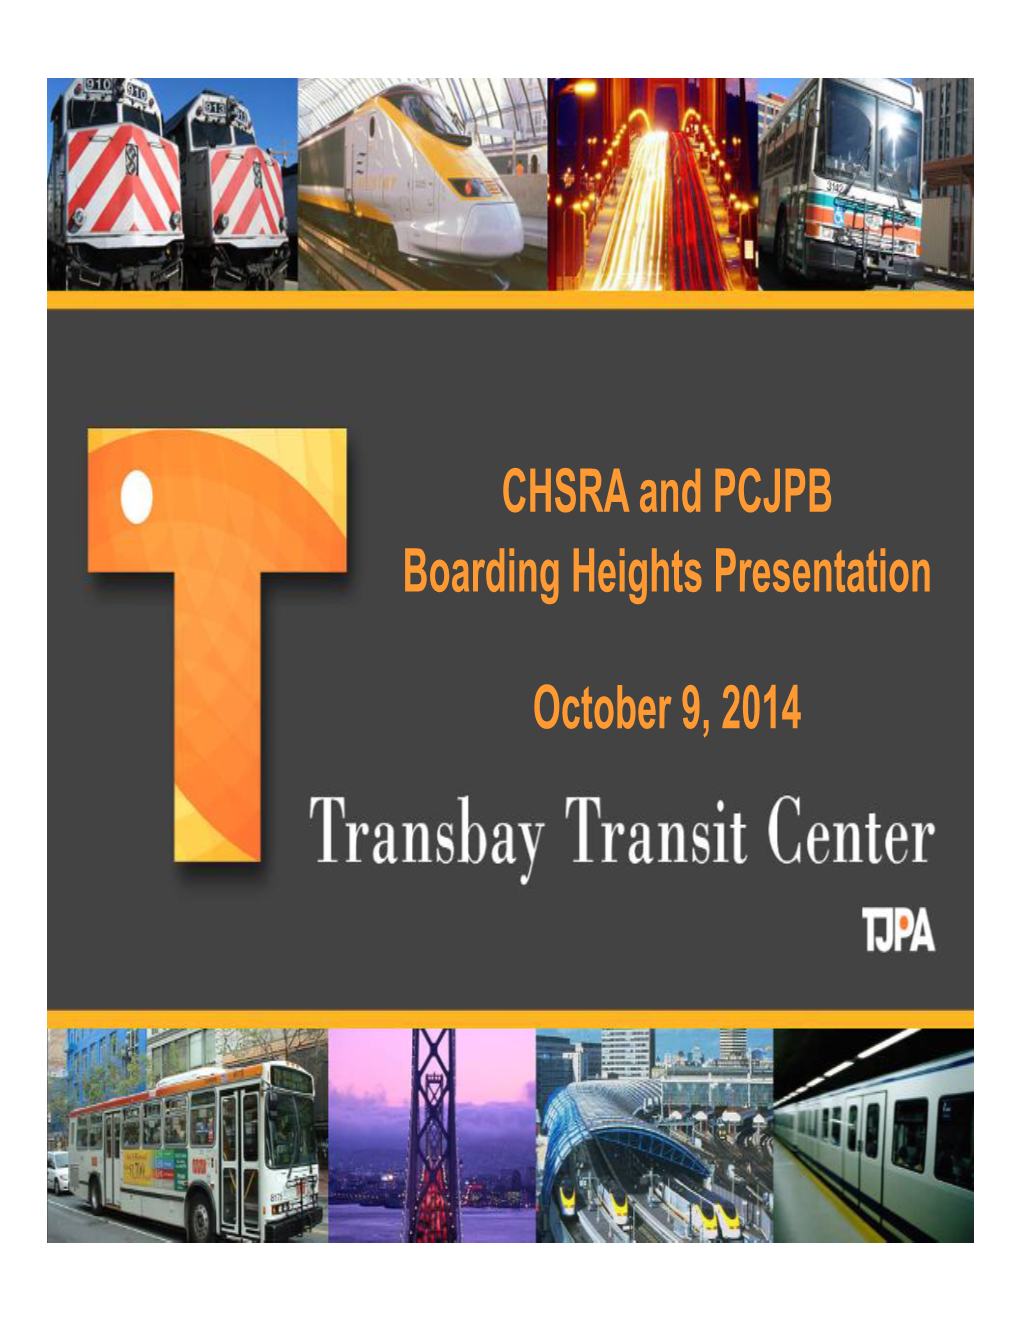 CHSRA and PCJPB Boarding Heights Presentation October 9, 2014